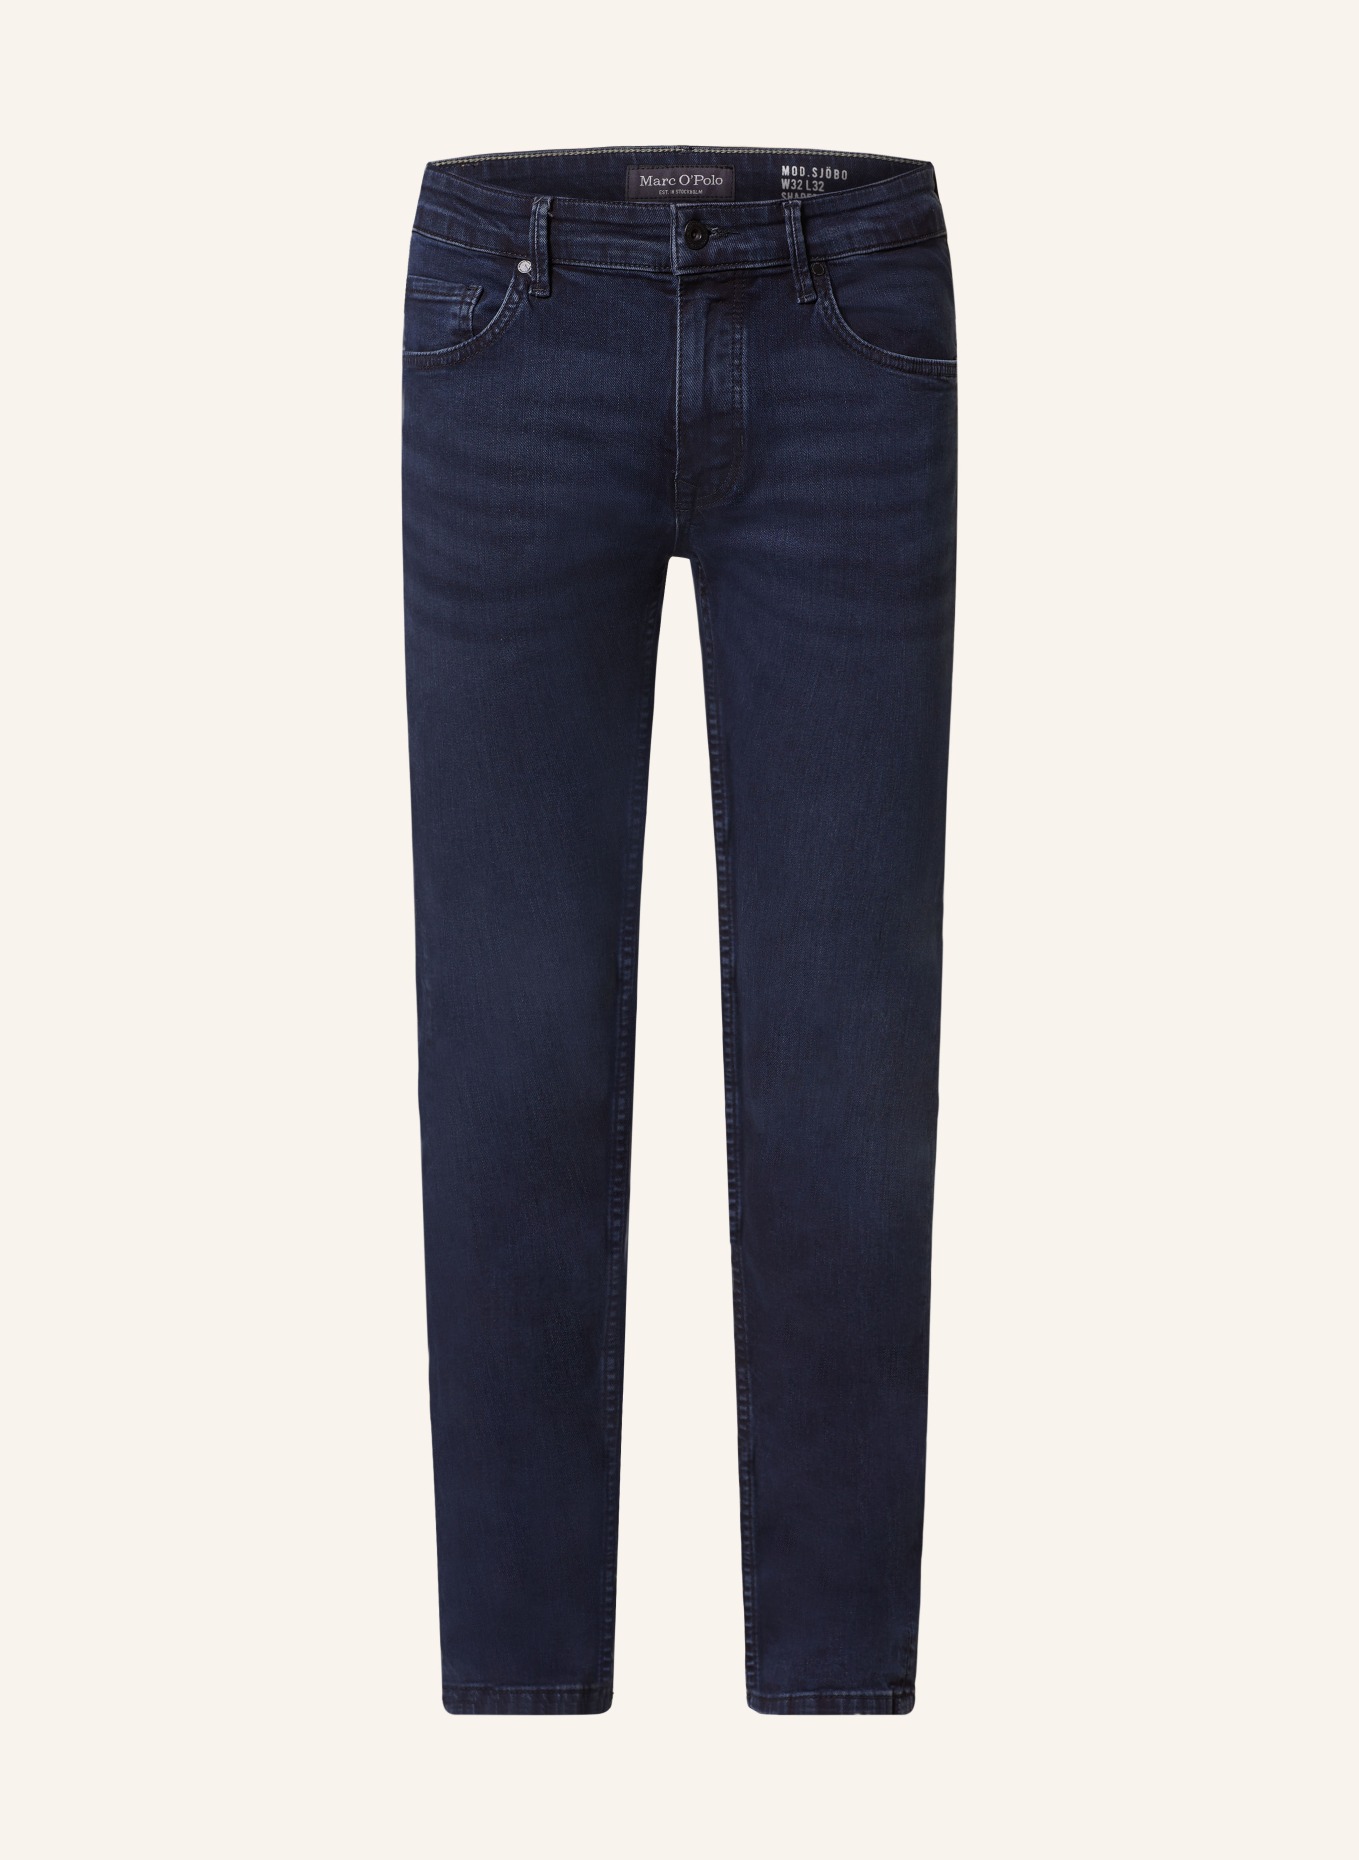 Marc O'Polo Jeans Shaped Fit, Farbe: 034 blue black (Bild 1)